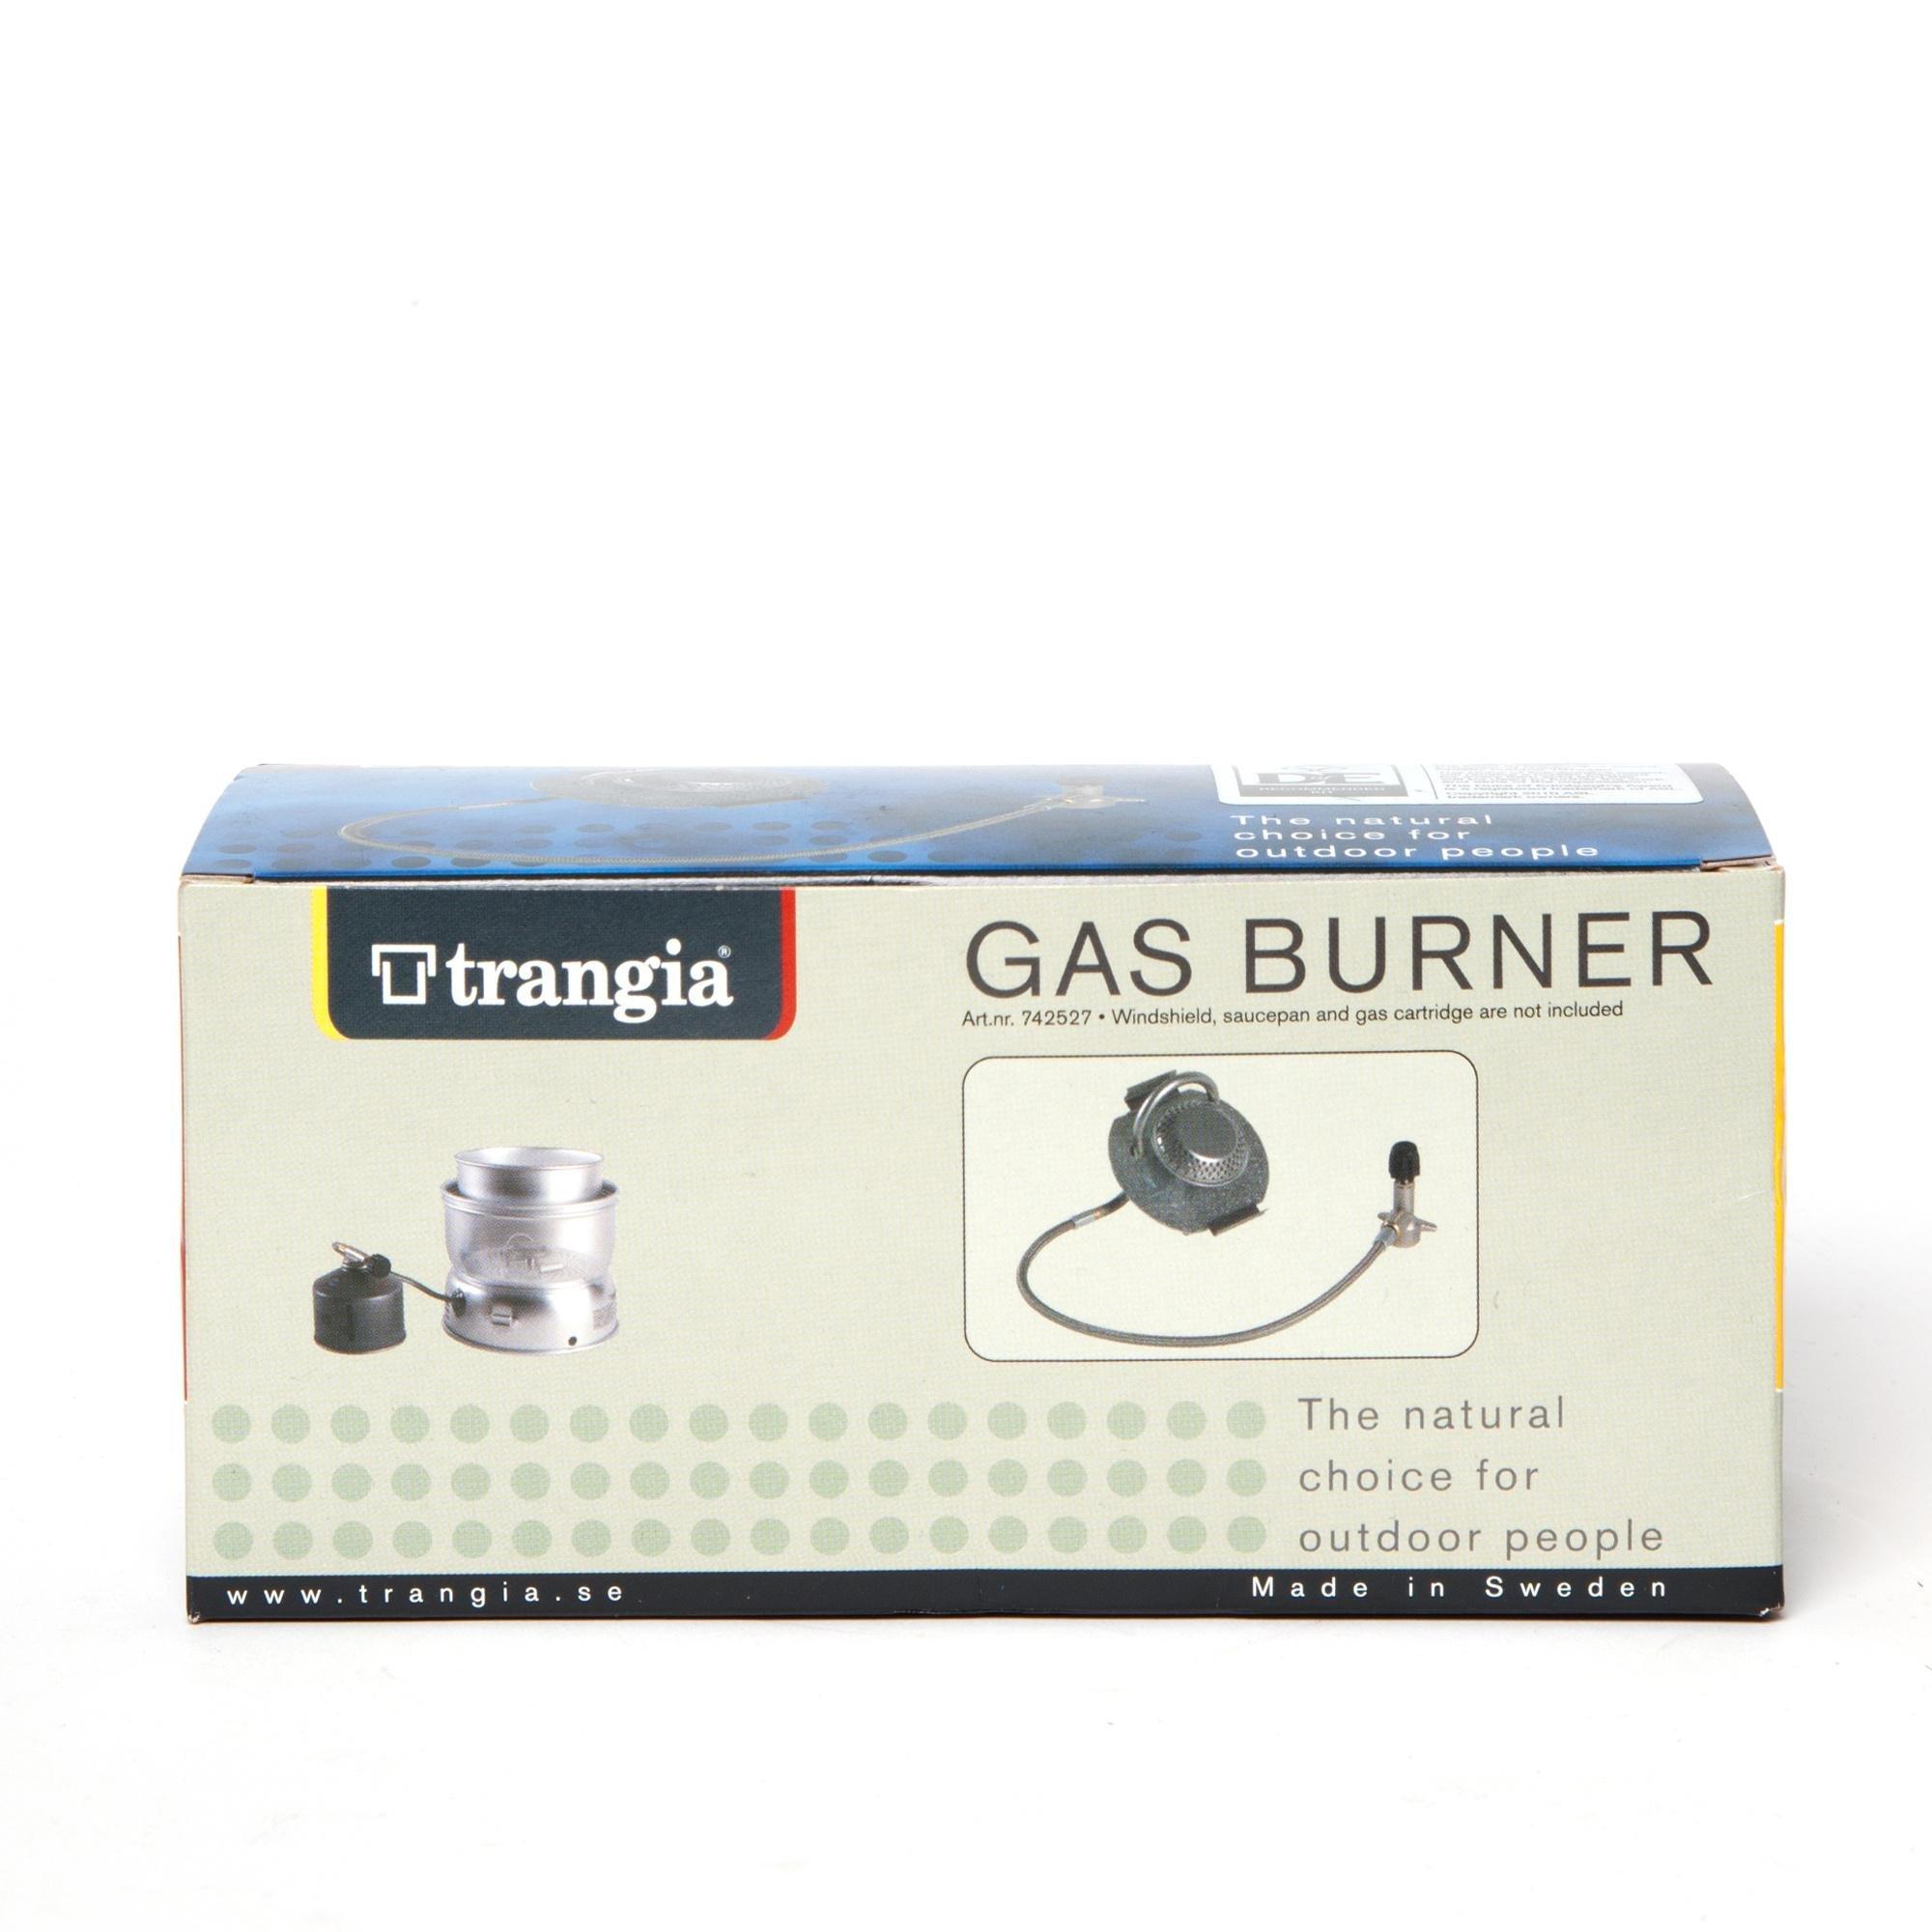  Trangia Gas Burner, Silver